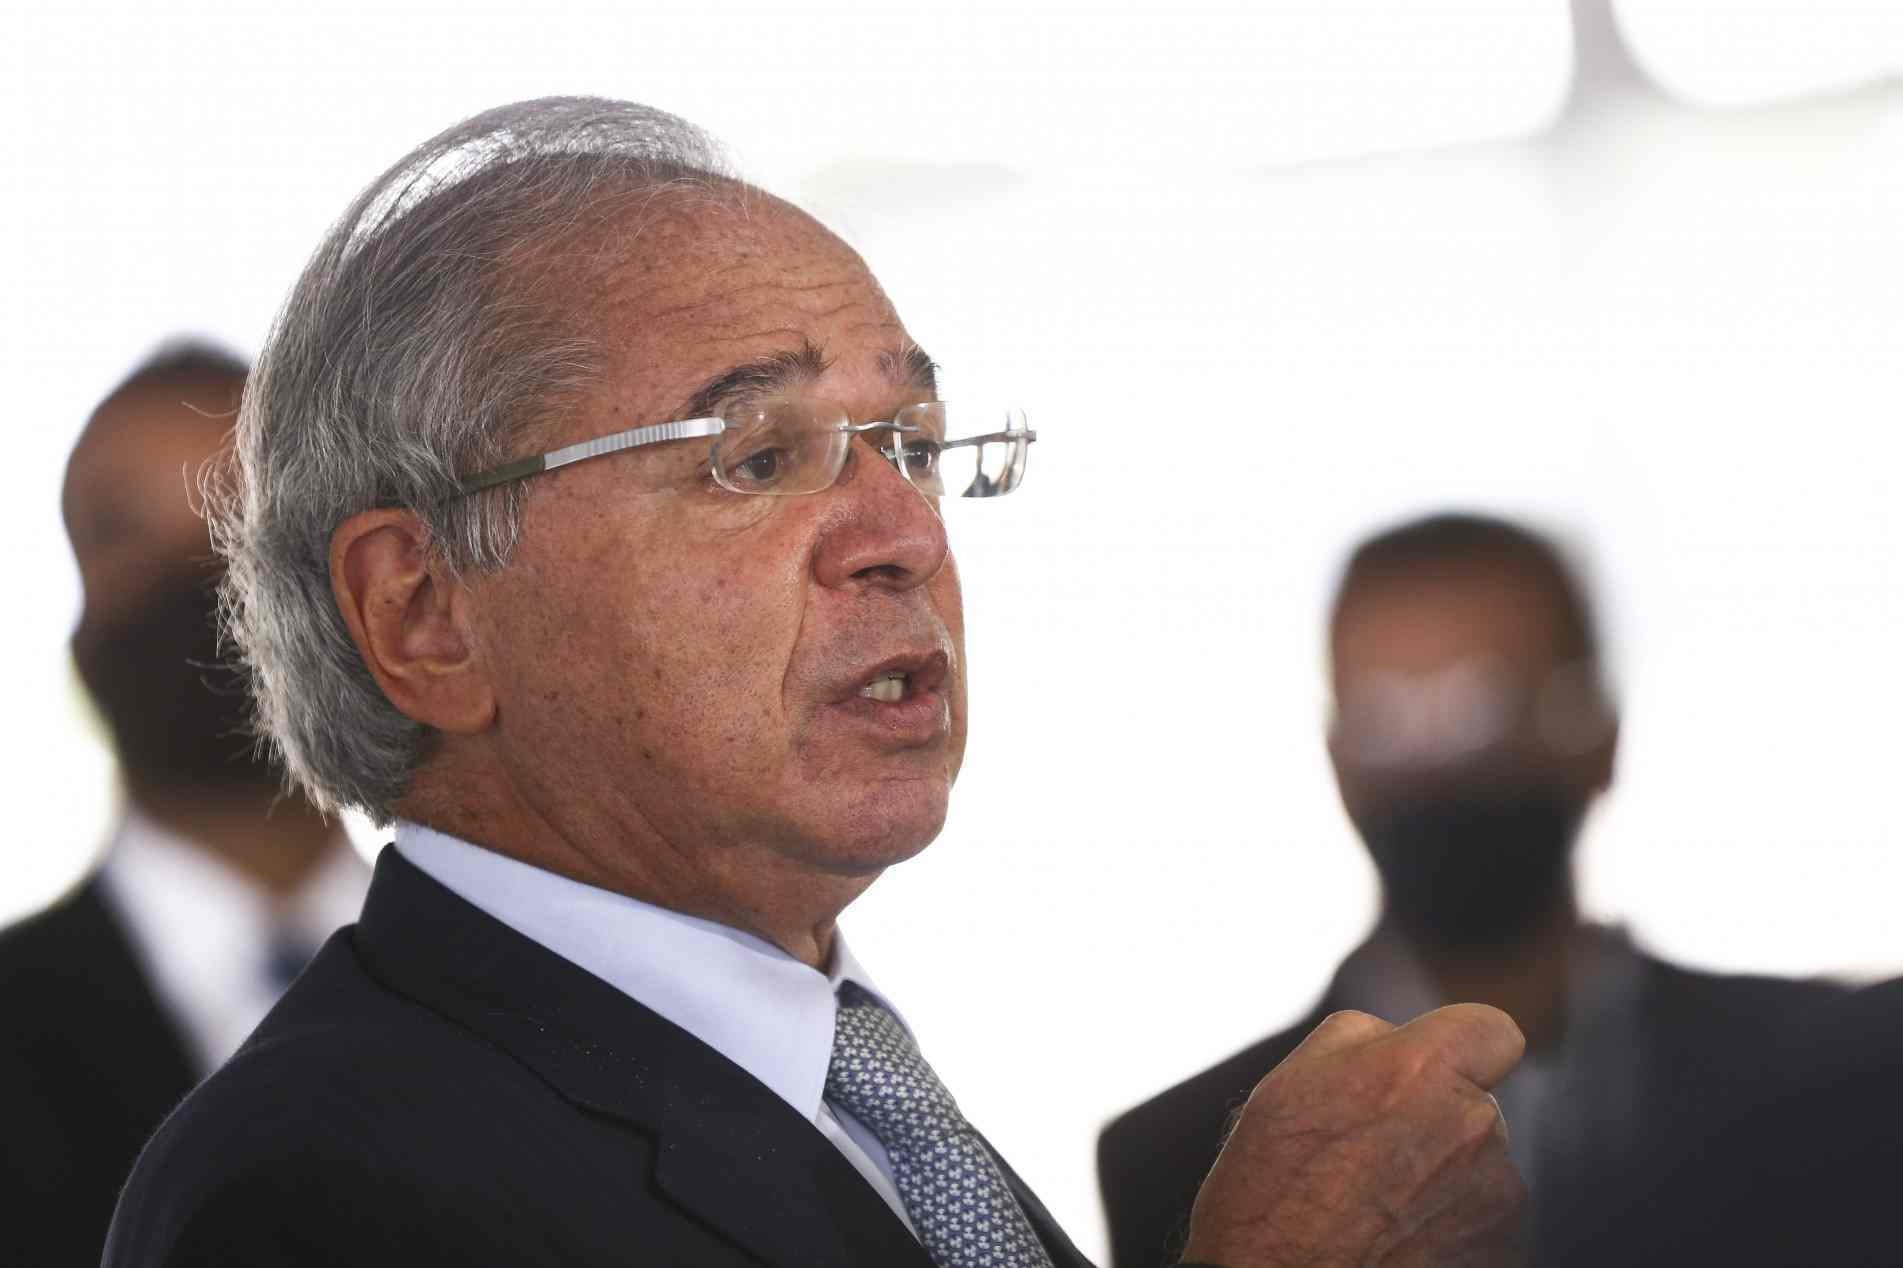 O ministro da Economia, Paulo Guedes, durante entrevista coletiva no Palácio do Planalto.